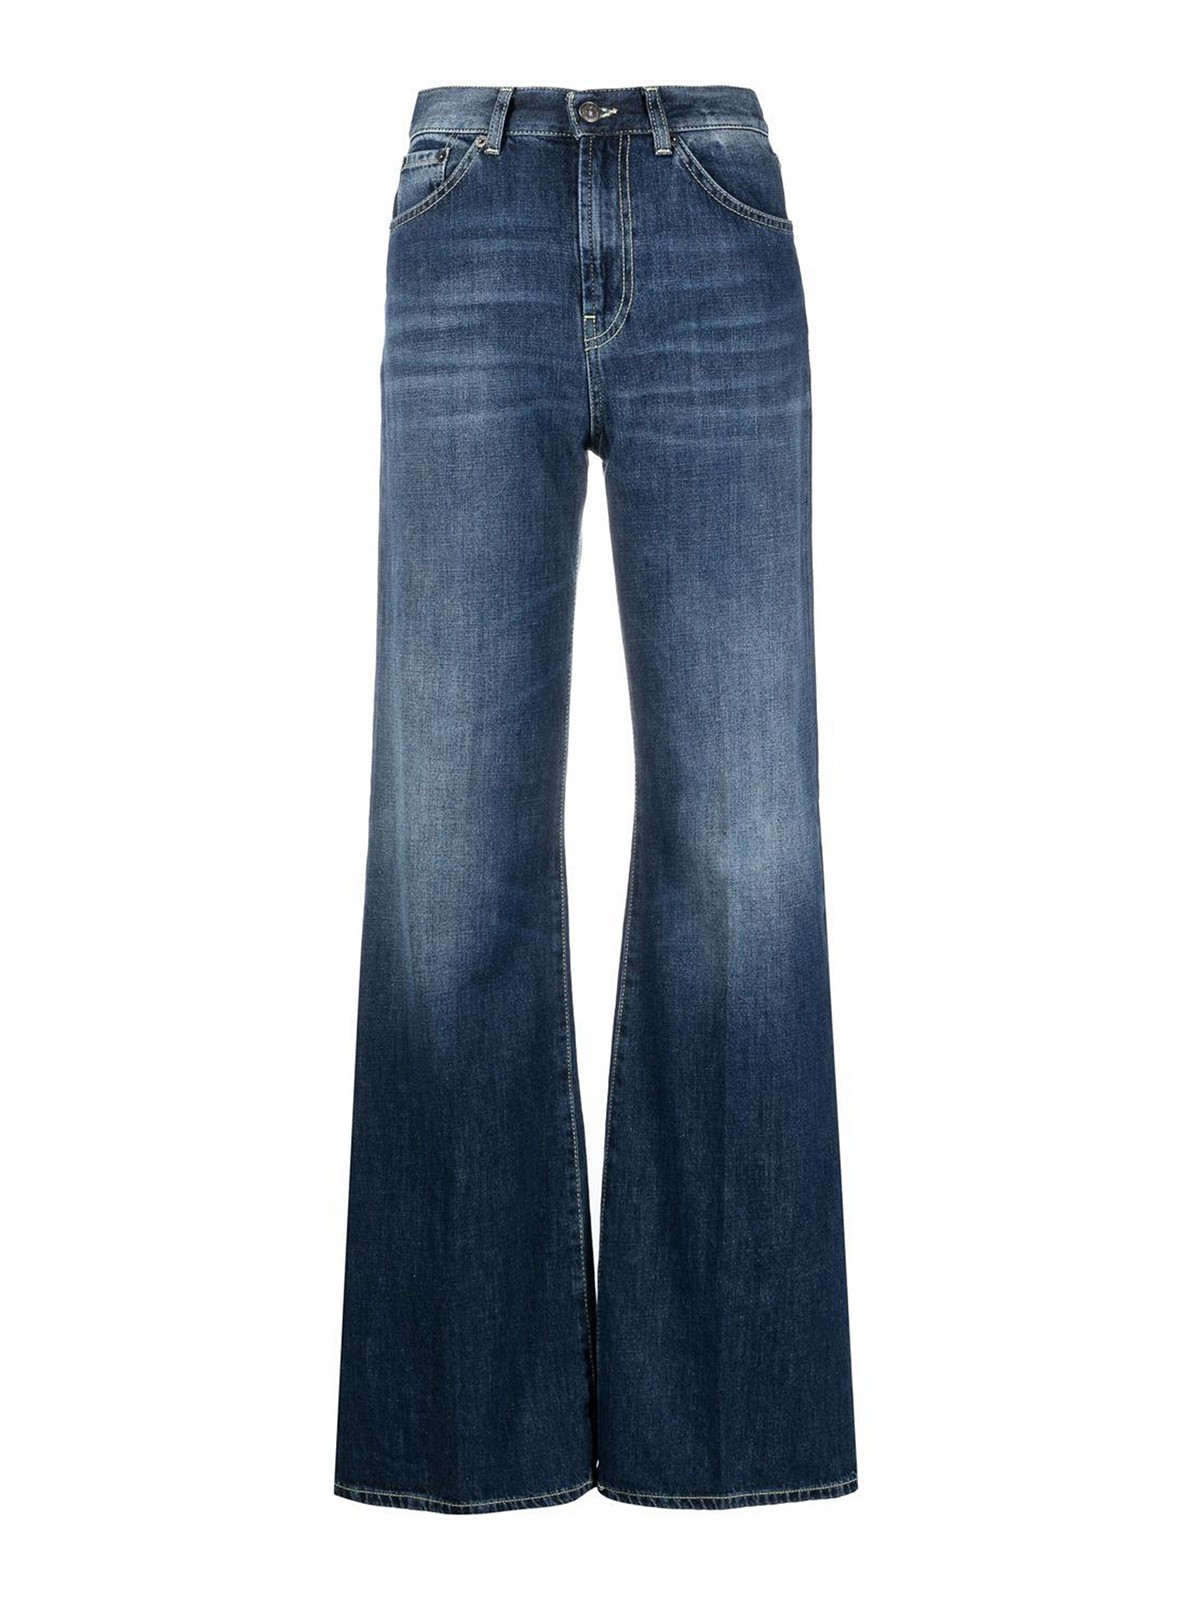 Flared jeans Dondup - Amber flared jeans - DP619DF0261DFE3800 | iKRIX.com